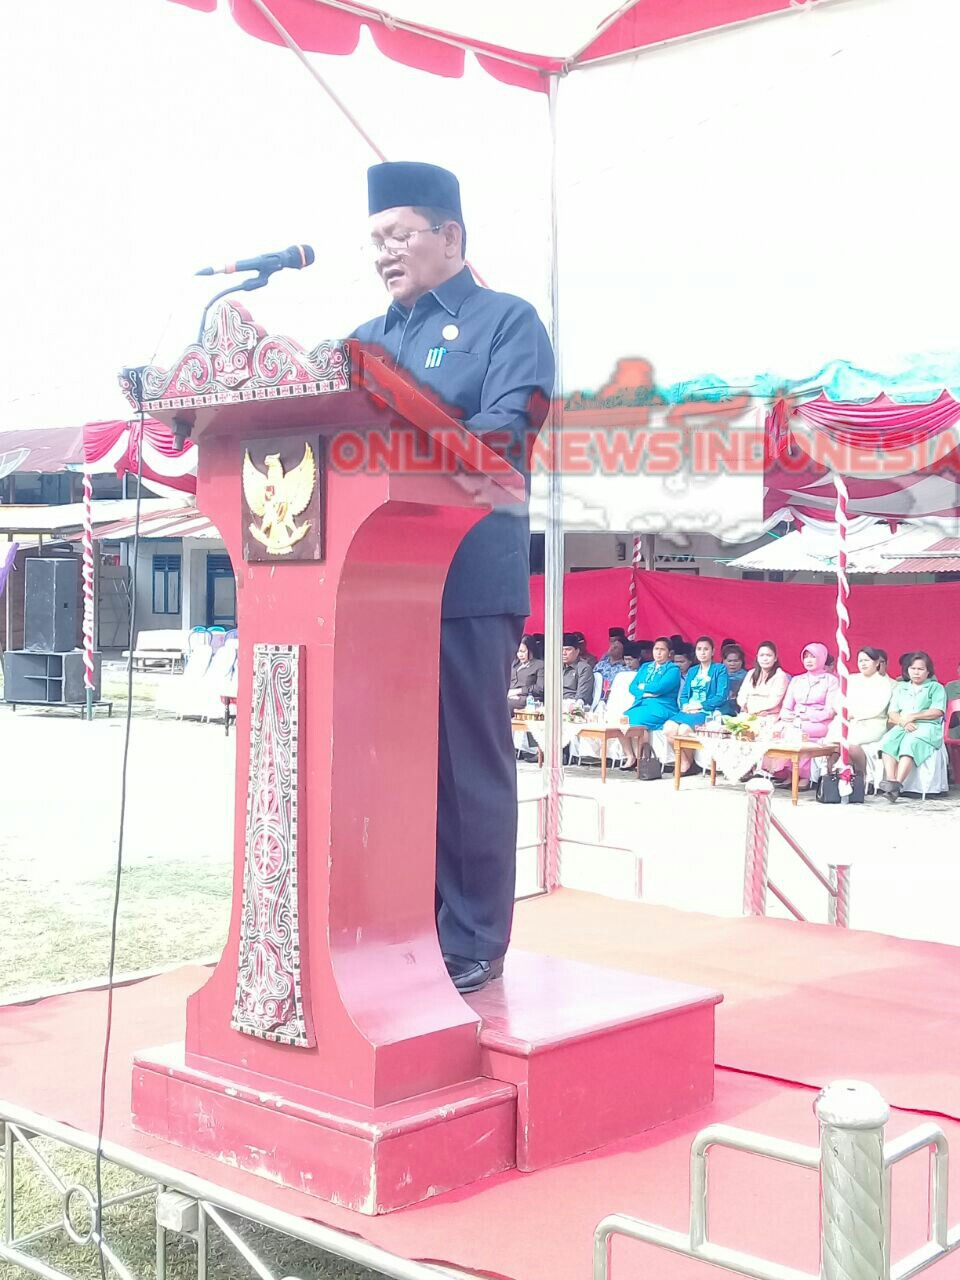 Foto : Bupati Samosir, Drs.Rapidin Simbolon MM, membacakan amanat Menteri Pendidikan dan Kebudayaan Nasional RI, Muhadjir Effendy di Hardiknas 2018.